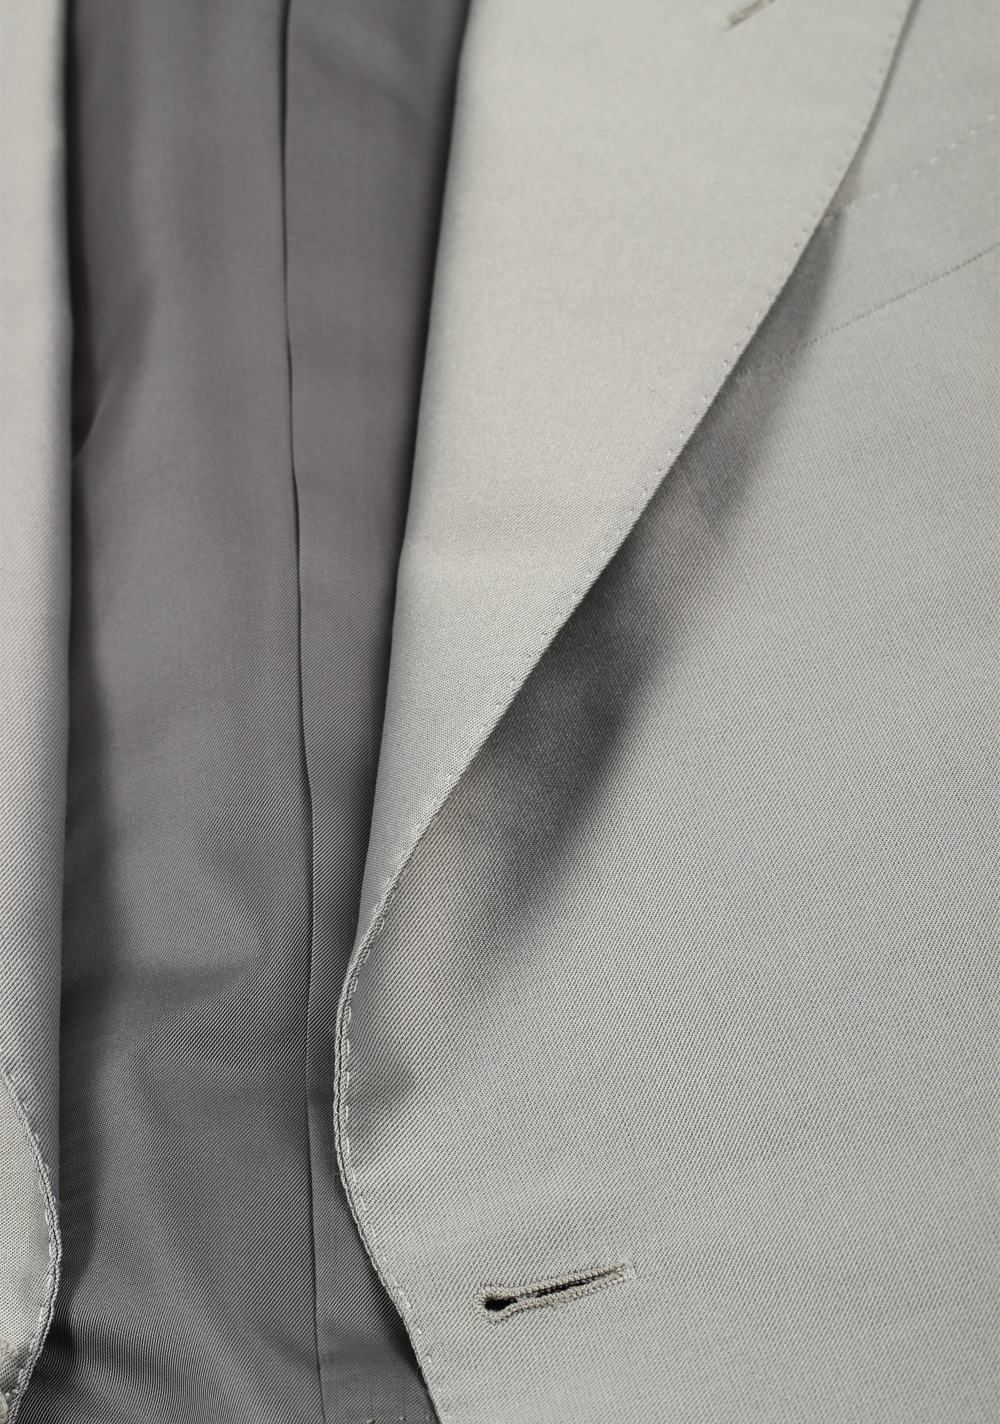 TOM FORD Shelton Silver Sport Coat Size 50 / 40R U.S. | Costume Limité